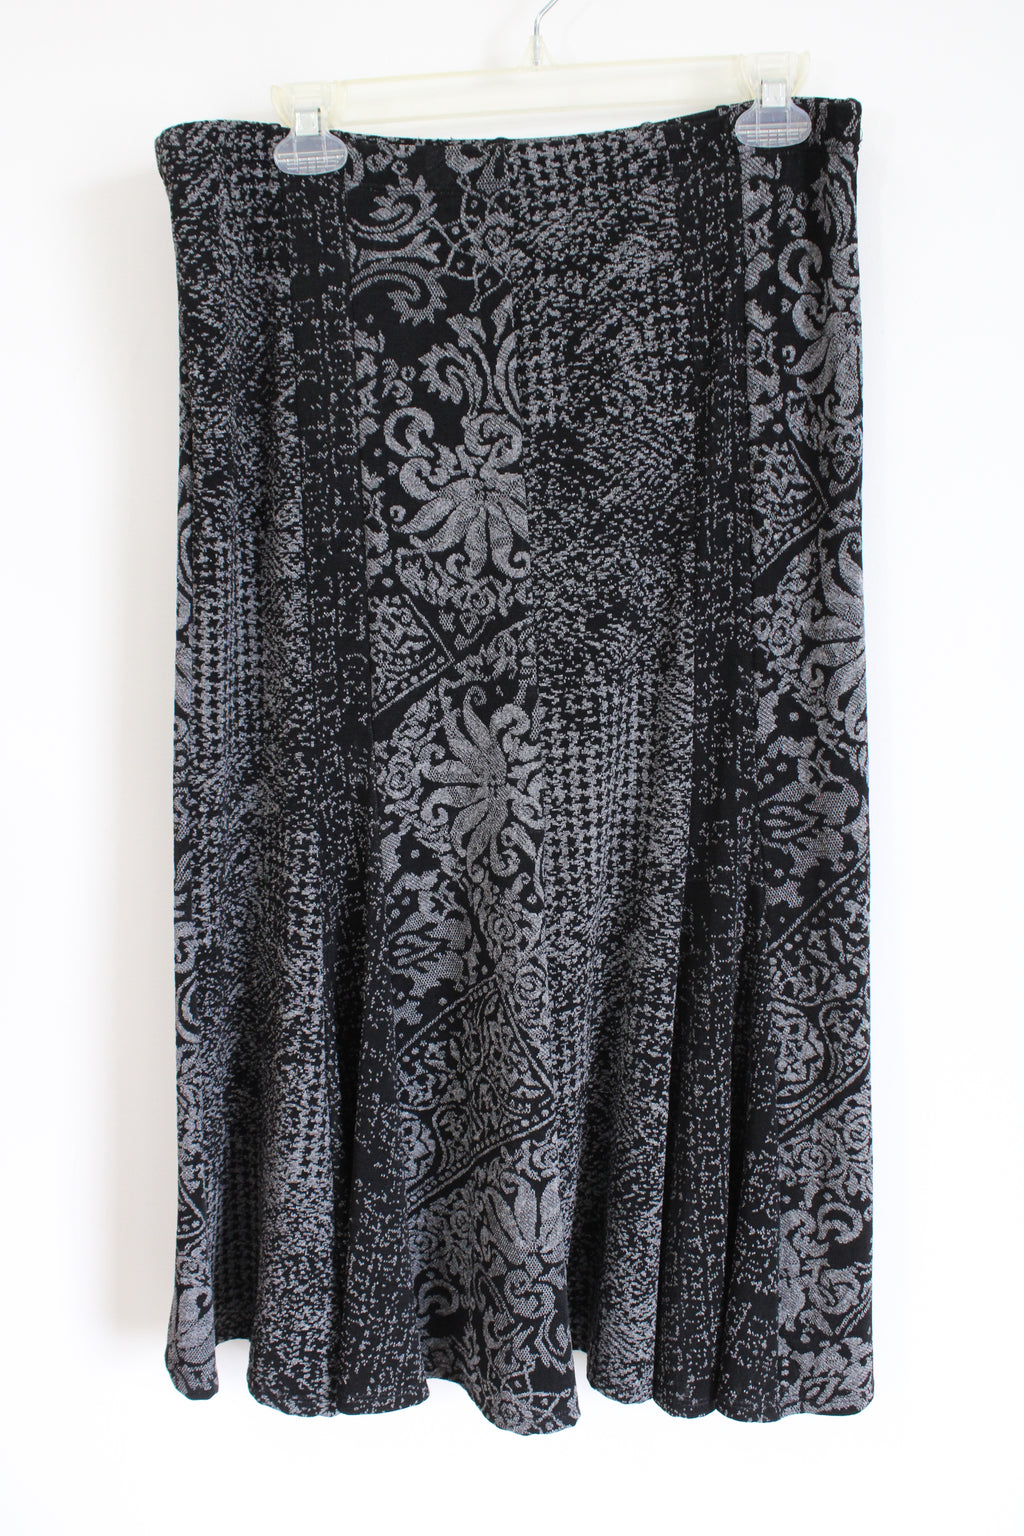 Coldwater Creek Black Gray Knit Skirt | M (10-12)